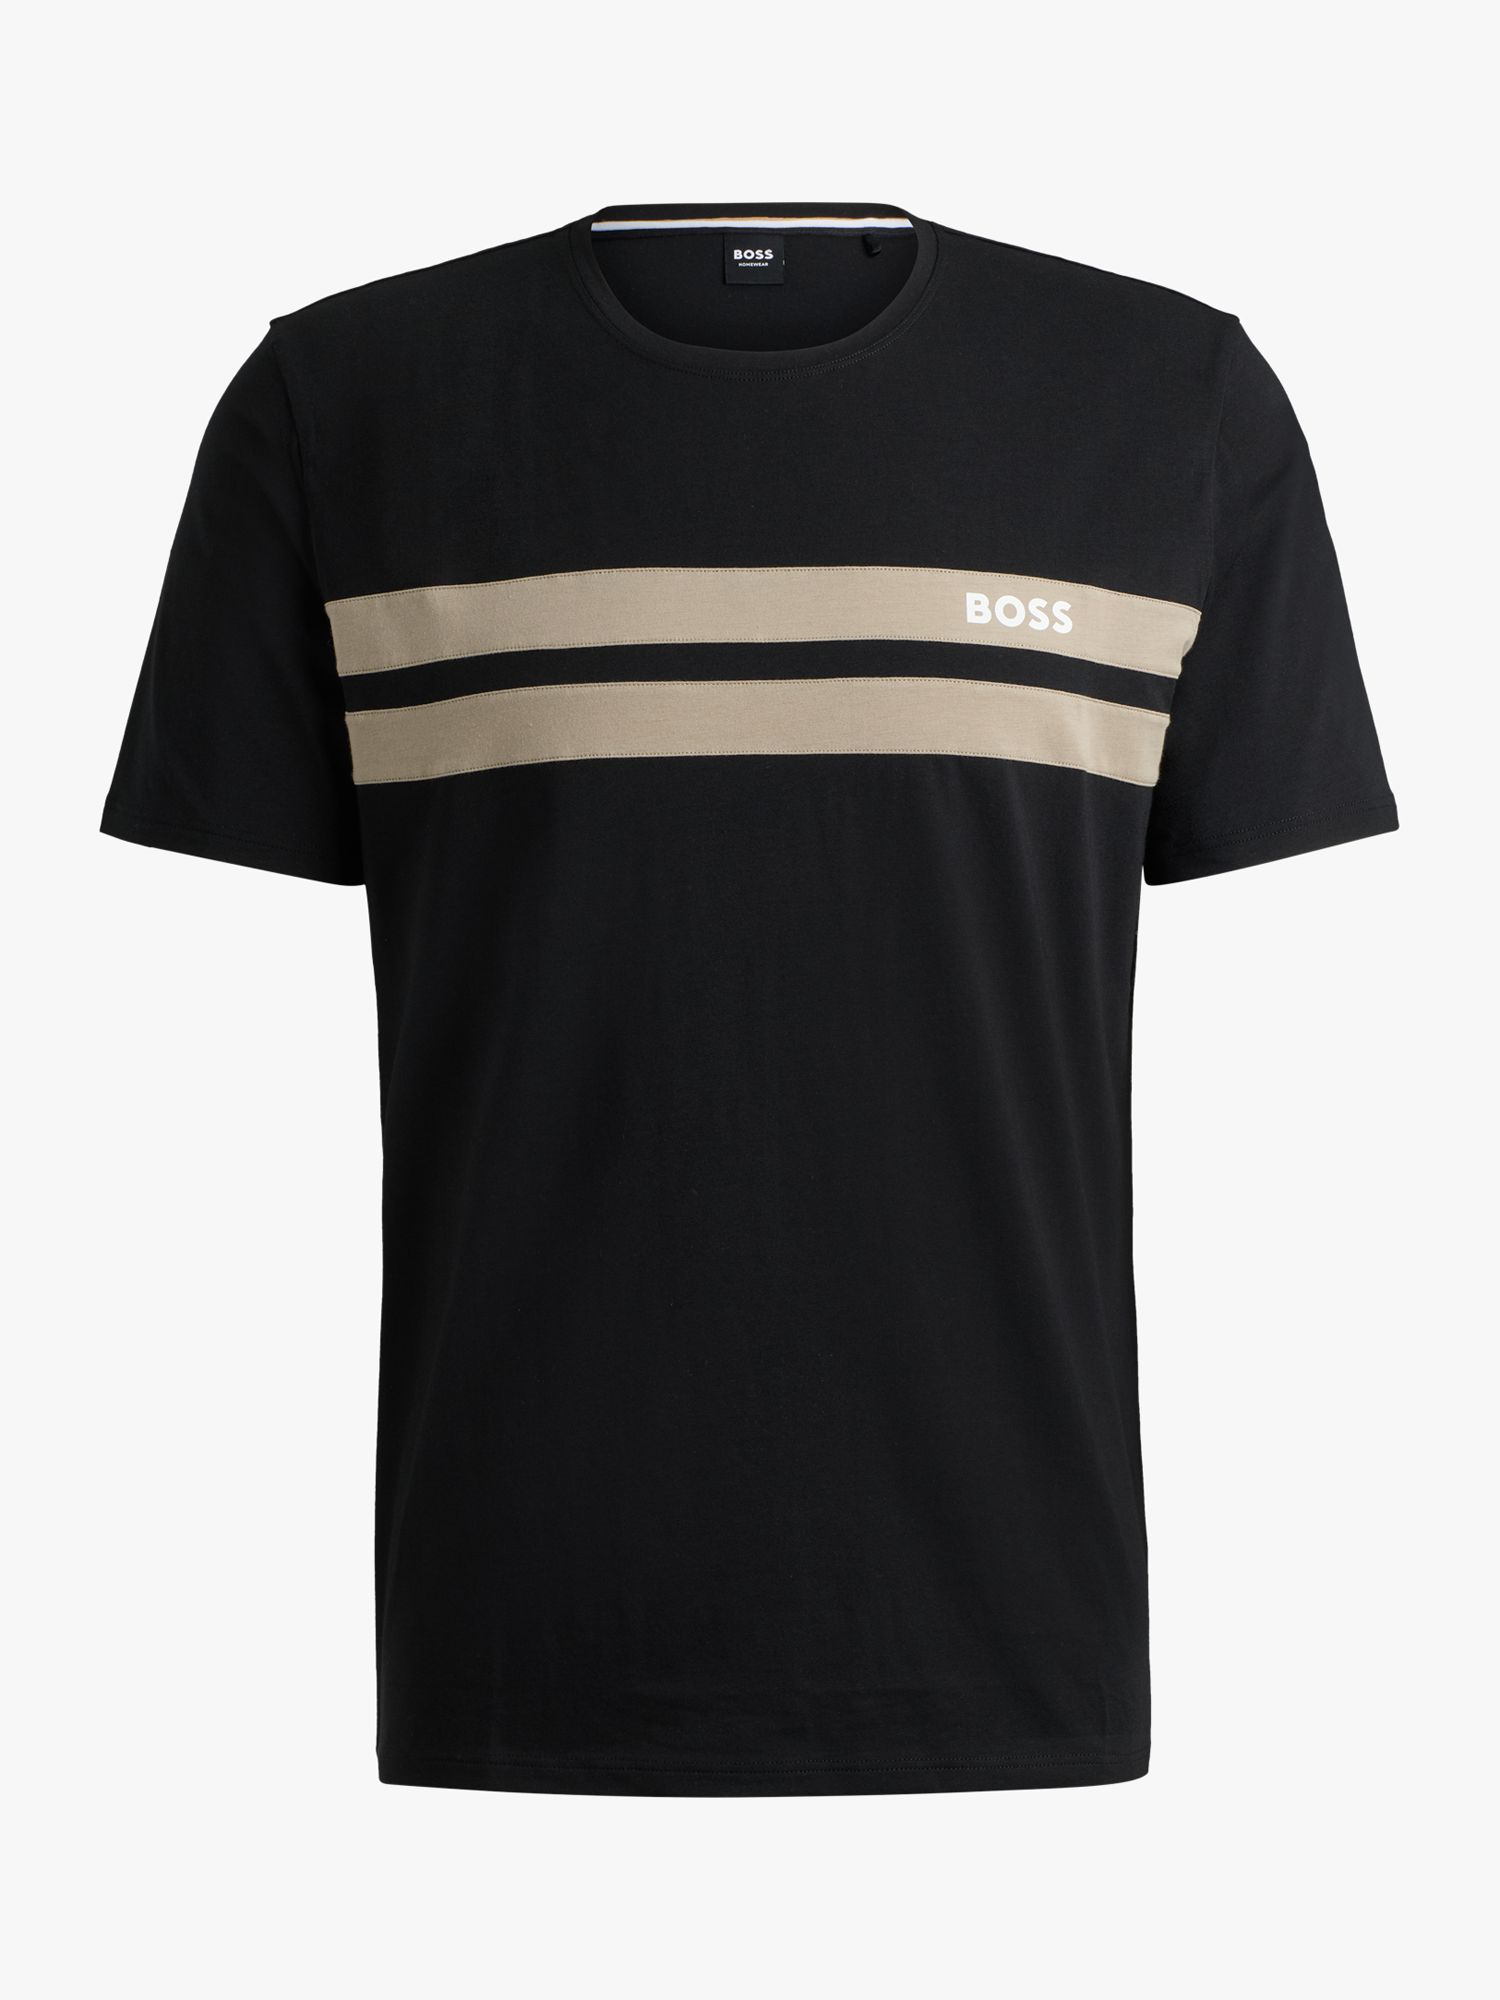 BOSS Balance T-Shirt, Black, S